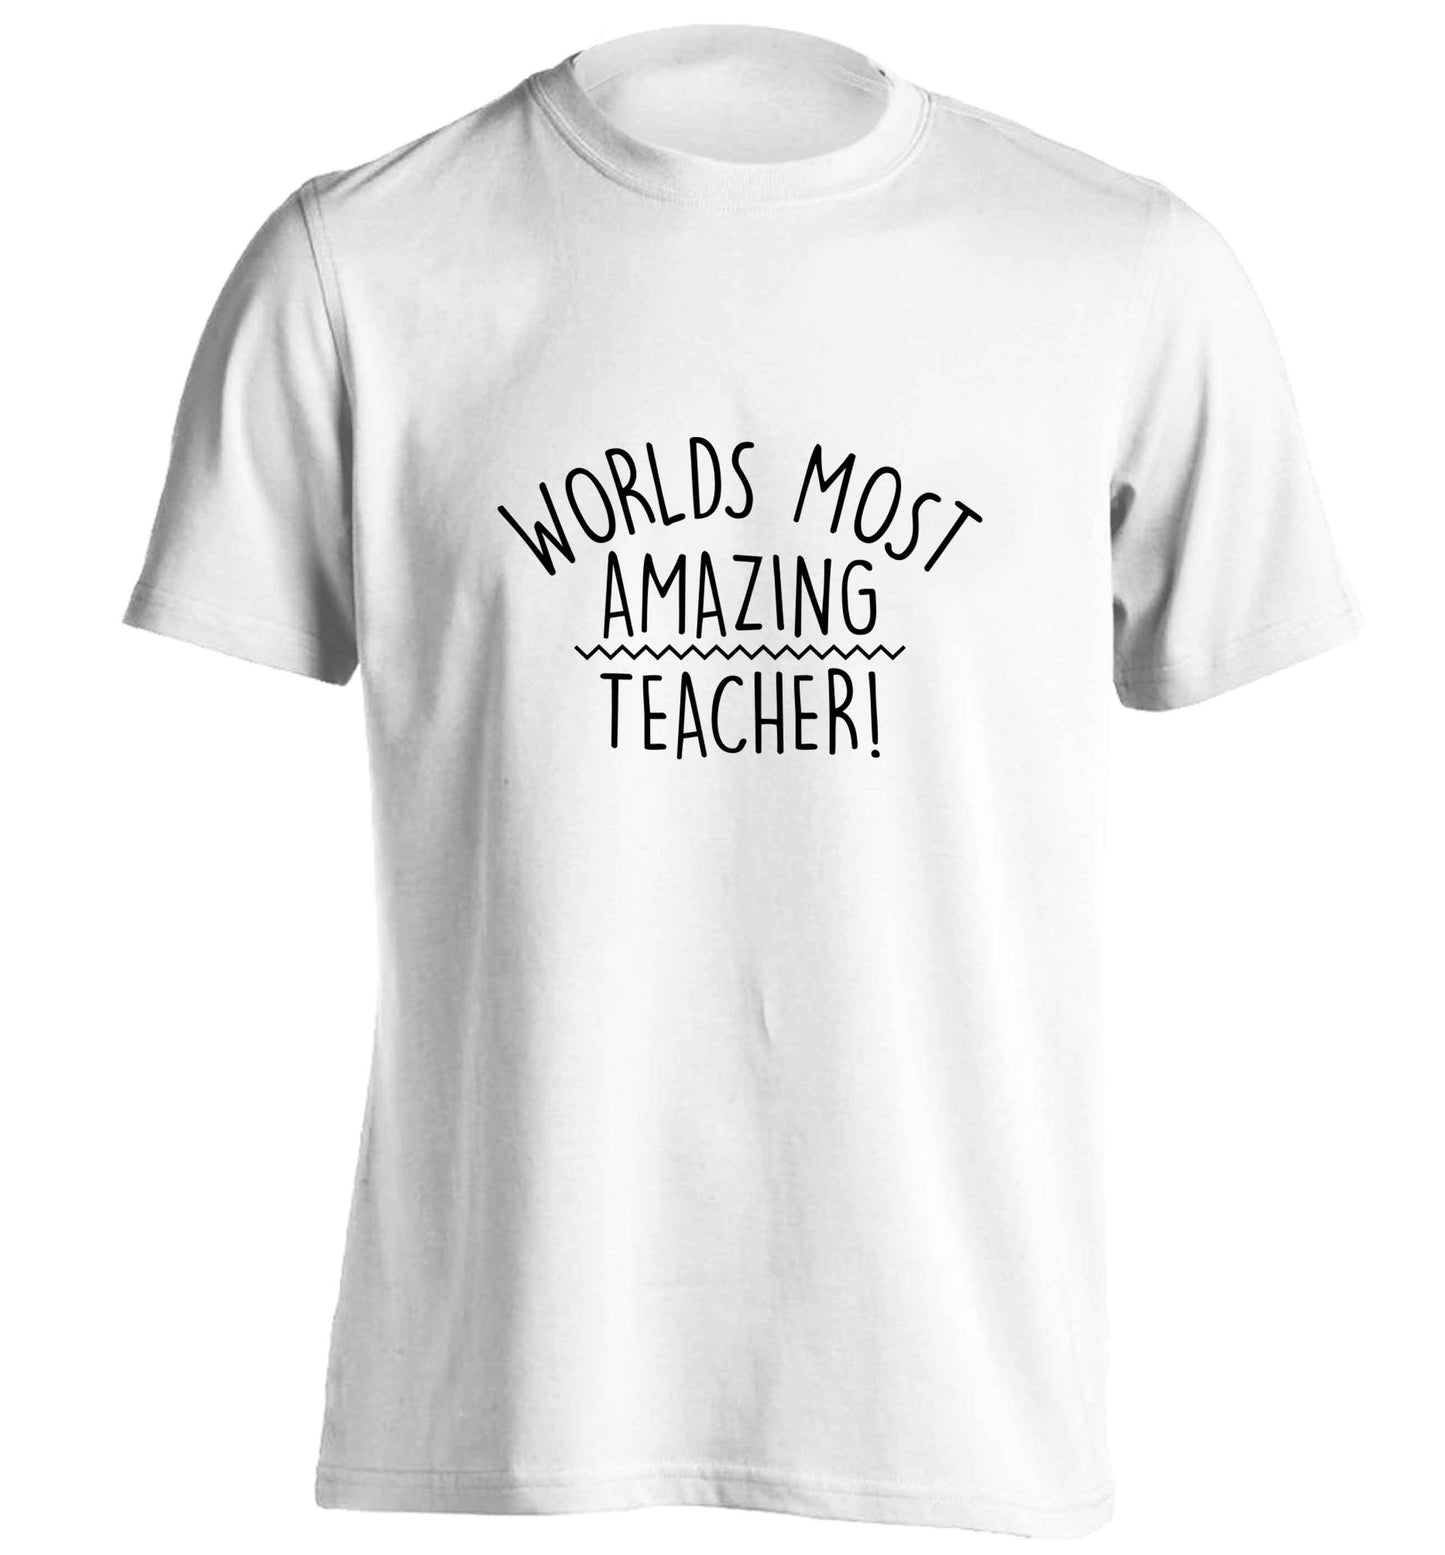 Worlds most amazing teacher adults unisex white Tshirt 2XL